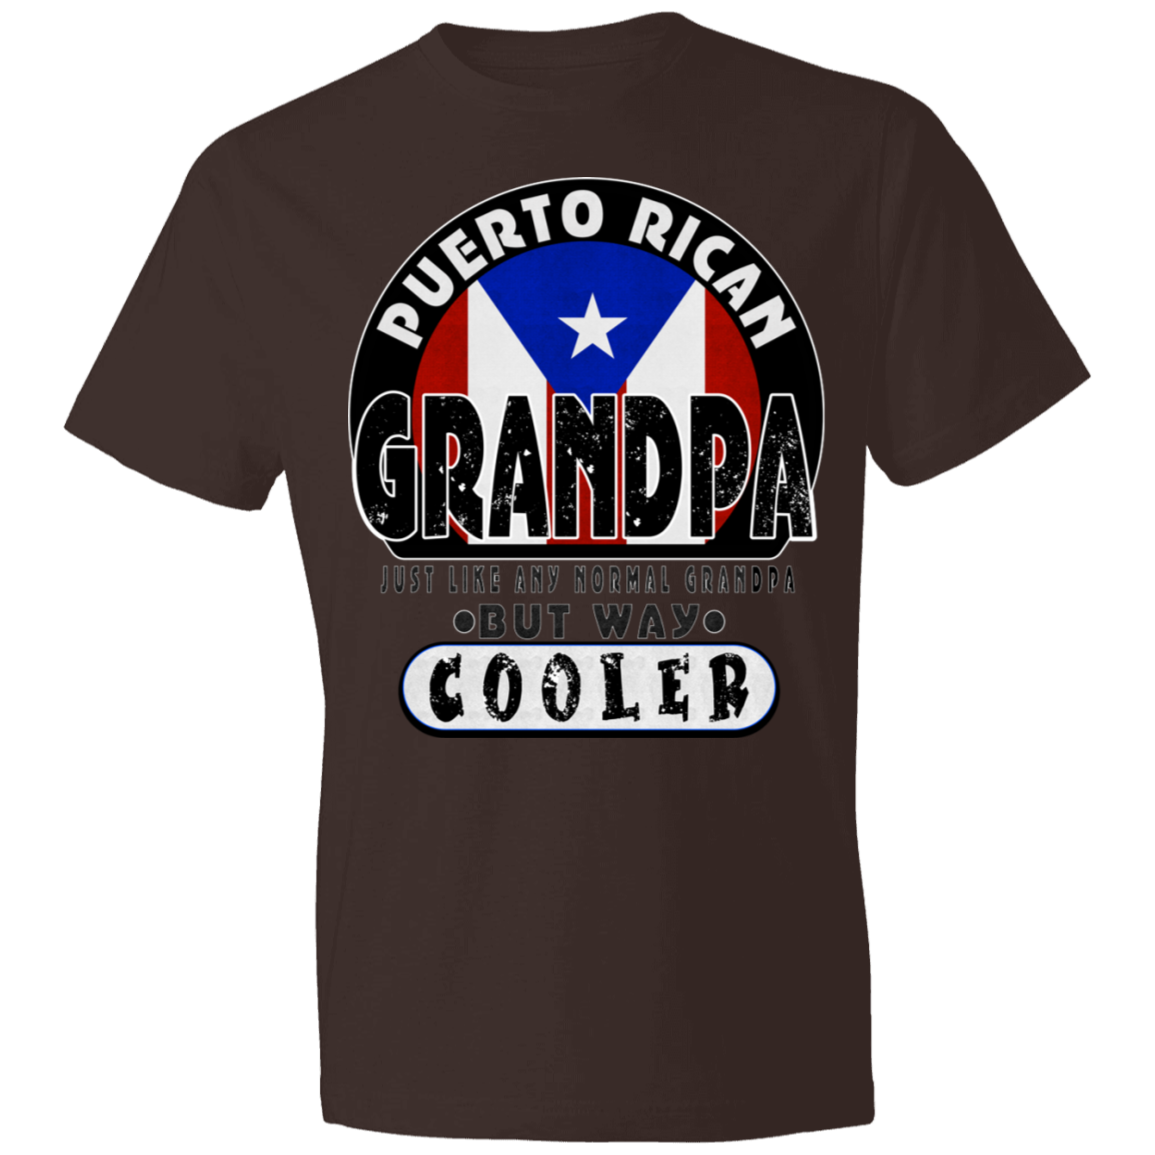 Cool Grandpa Lightweight T-Shirt 4.5 oz - Puerto Rican Pride